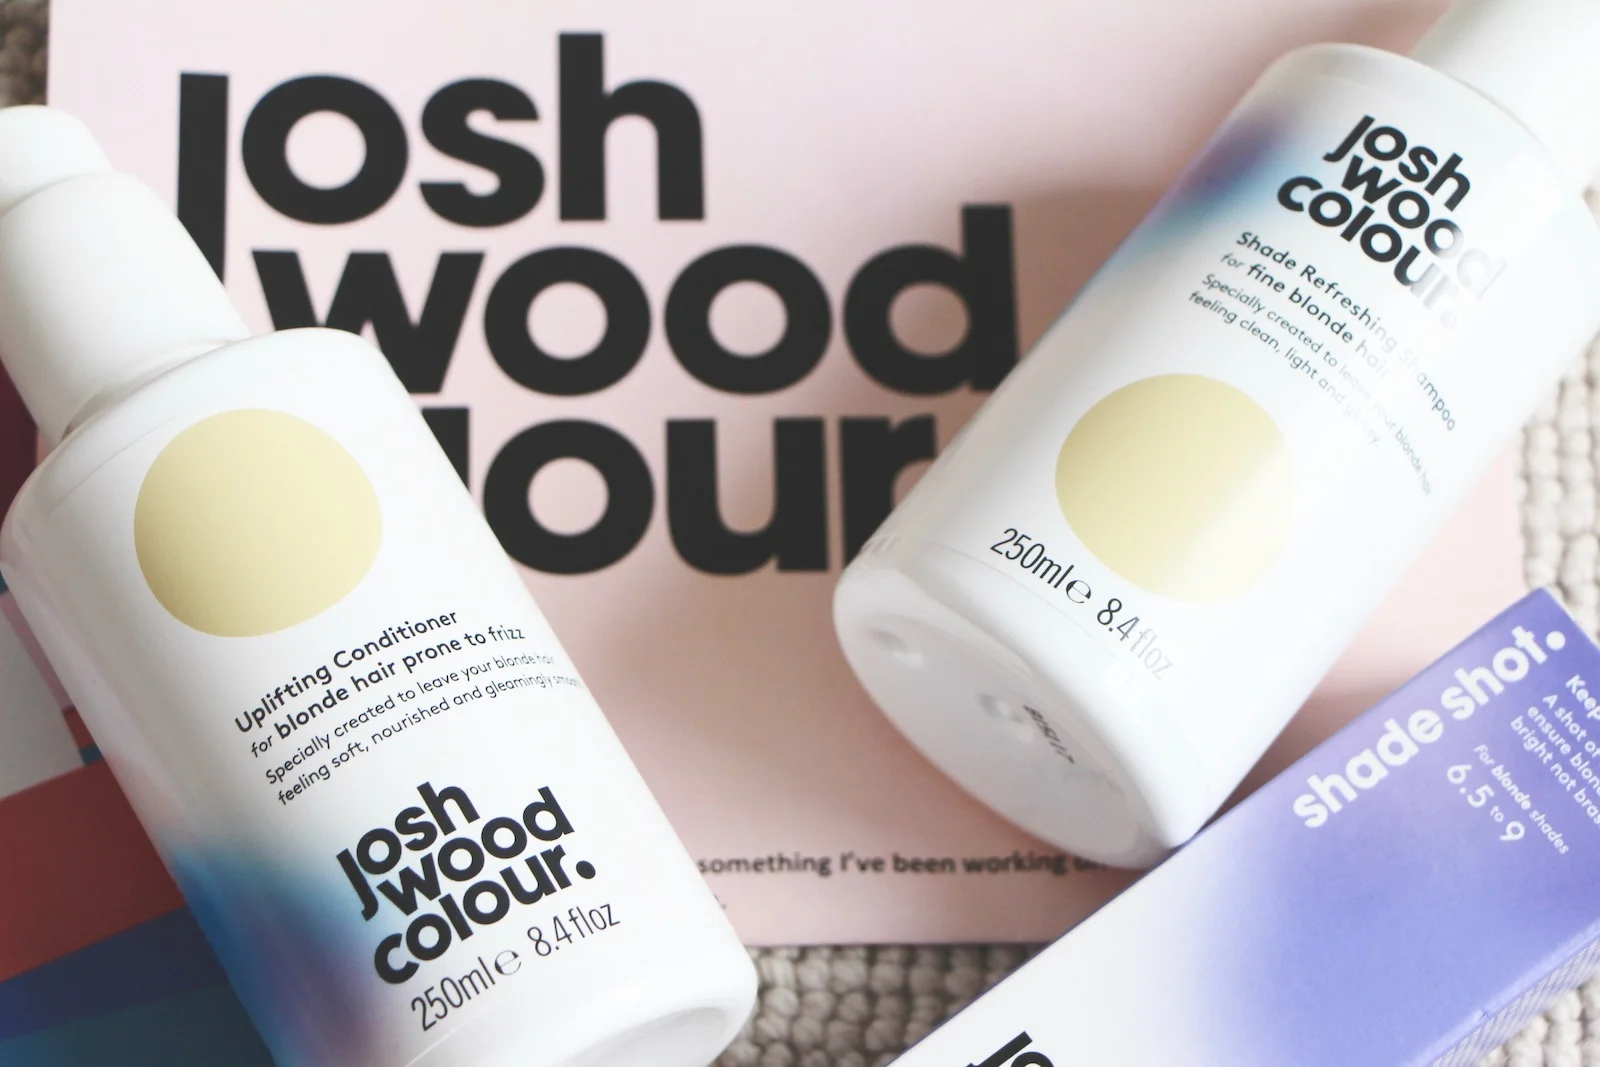 josh wood blonde shampoo and conditioner